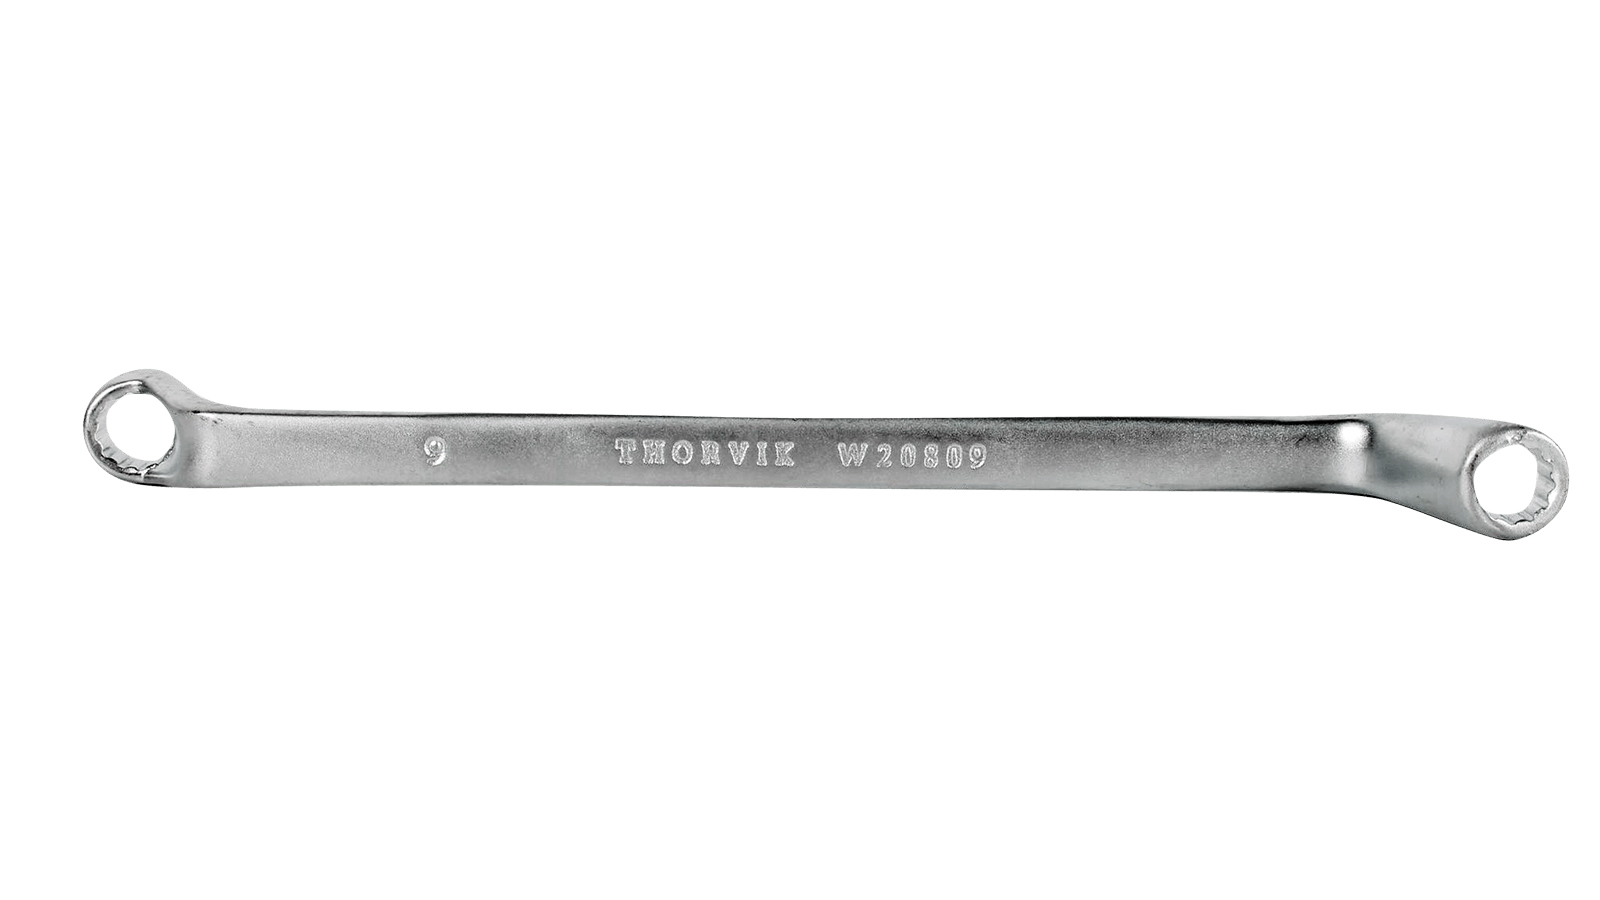 Ключ Накидной  8 Х 9 Thorvik Серии Arc THORVIK арт. W20809 имбусовый ключ thorvik hex 8 мм